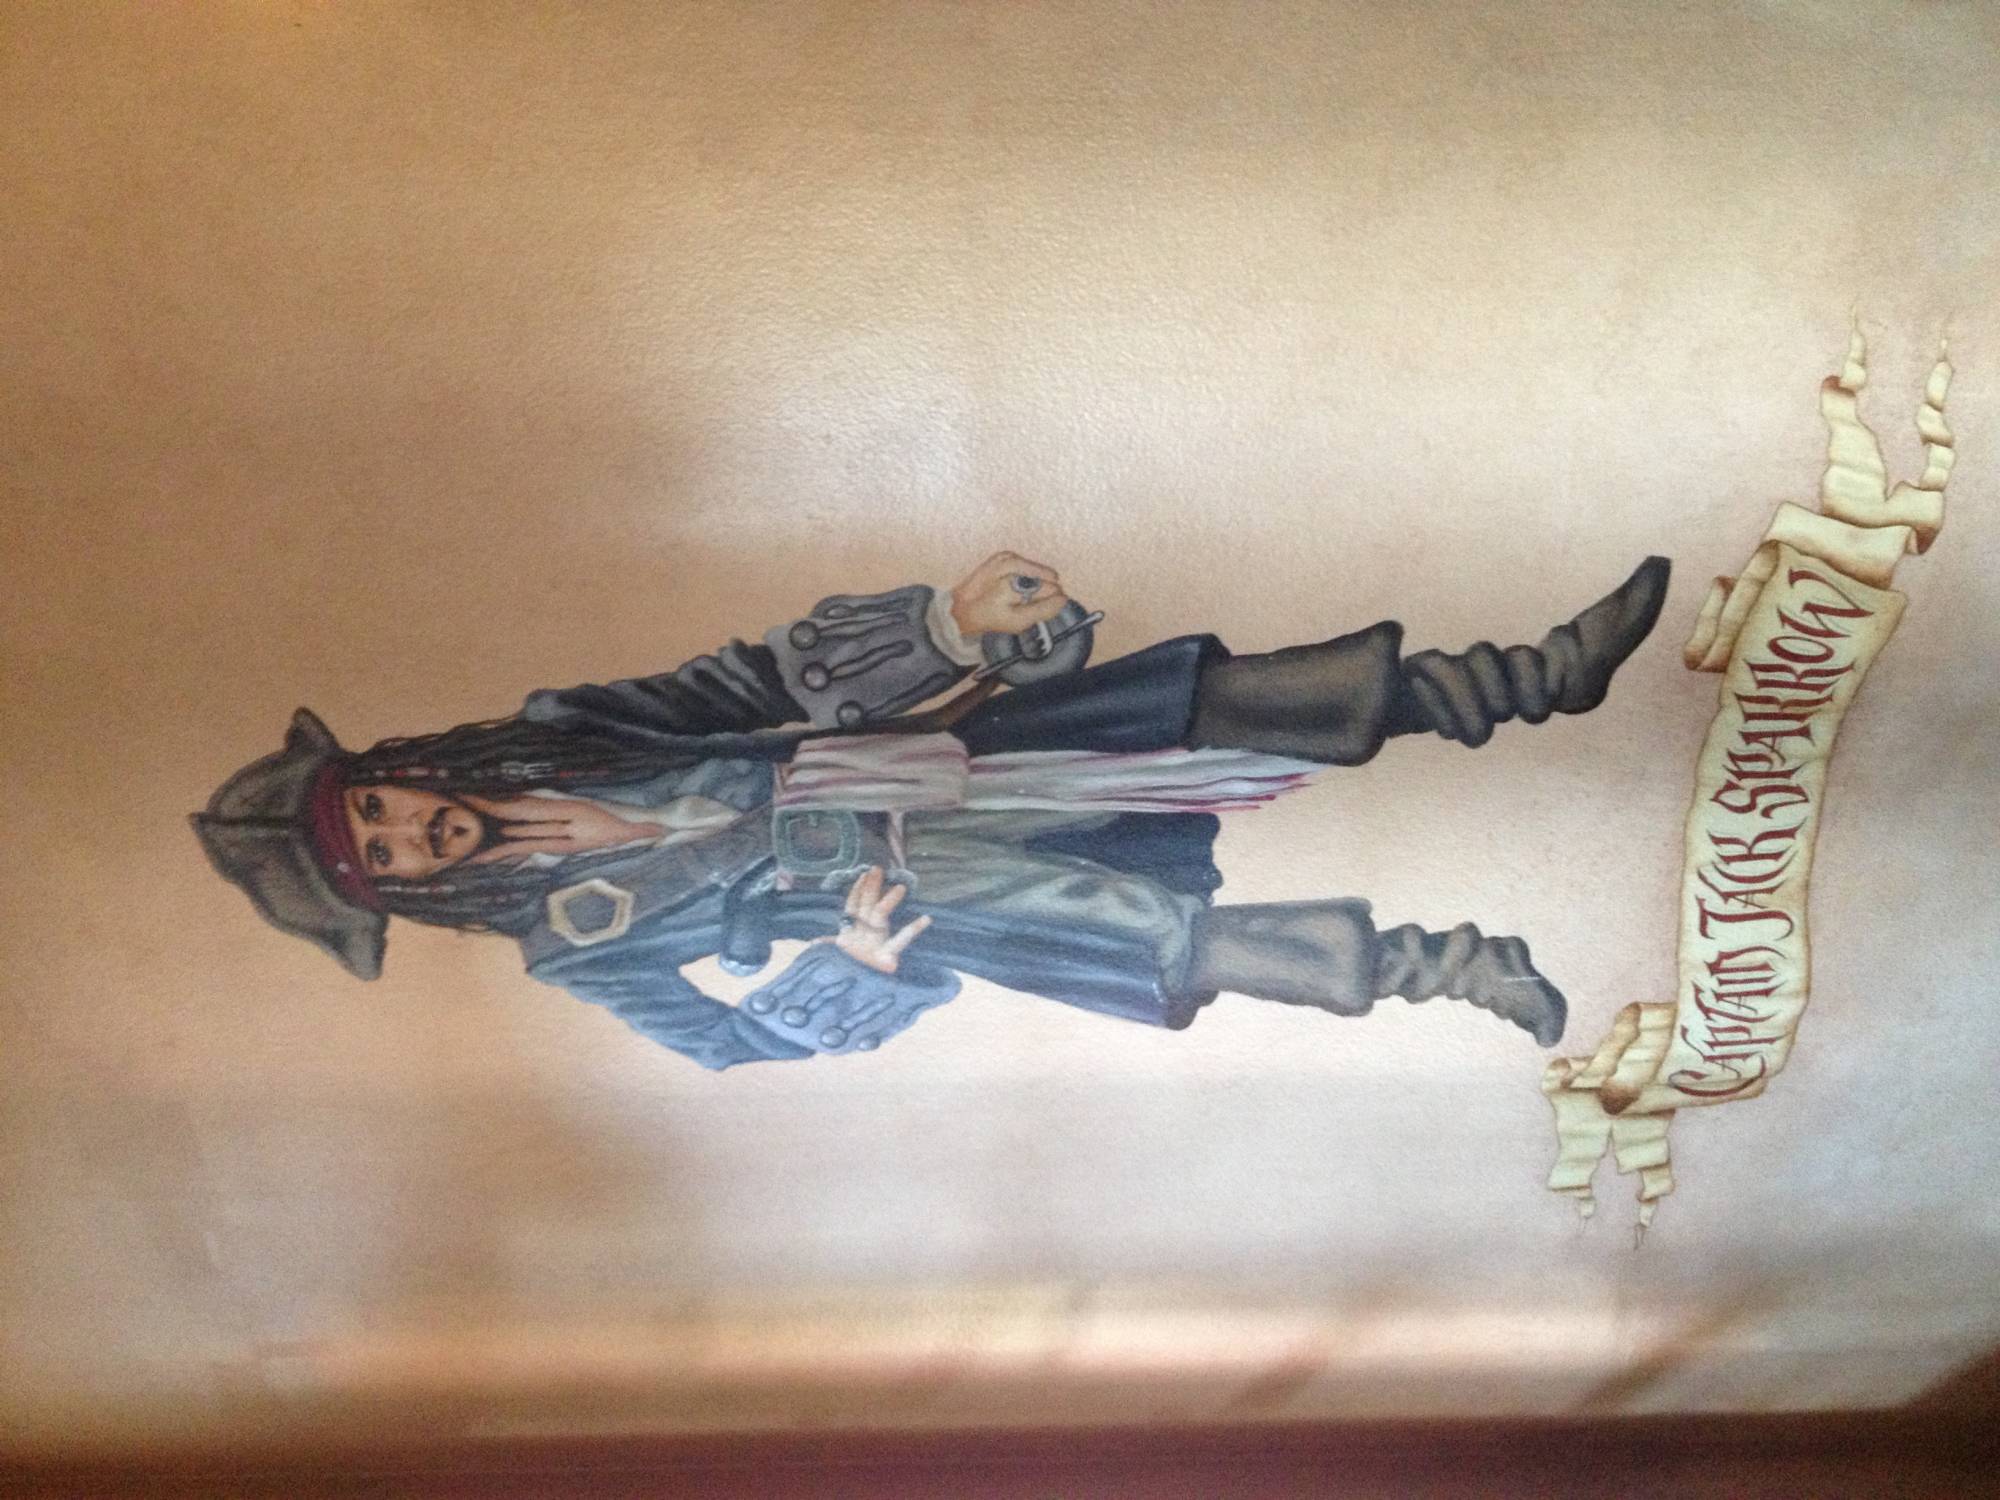 Mural at Pirates of the Caribbean